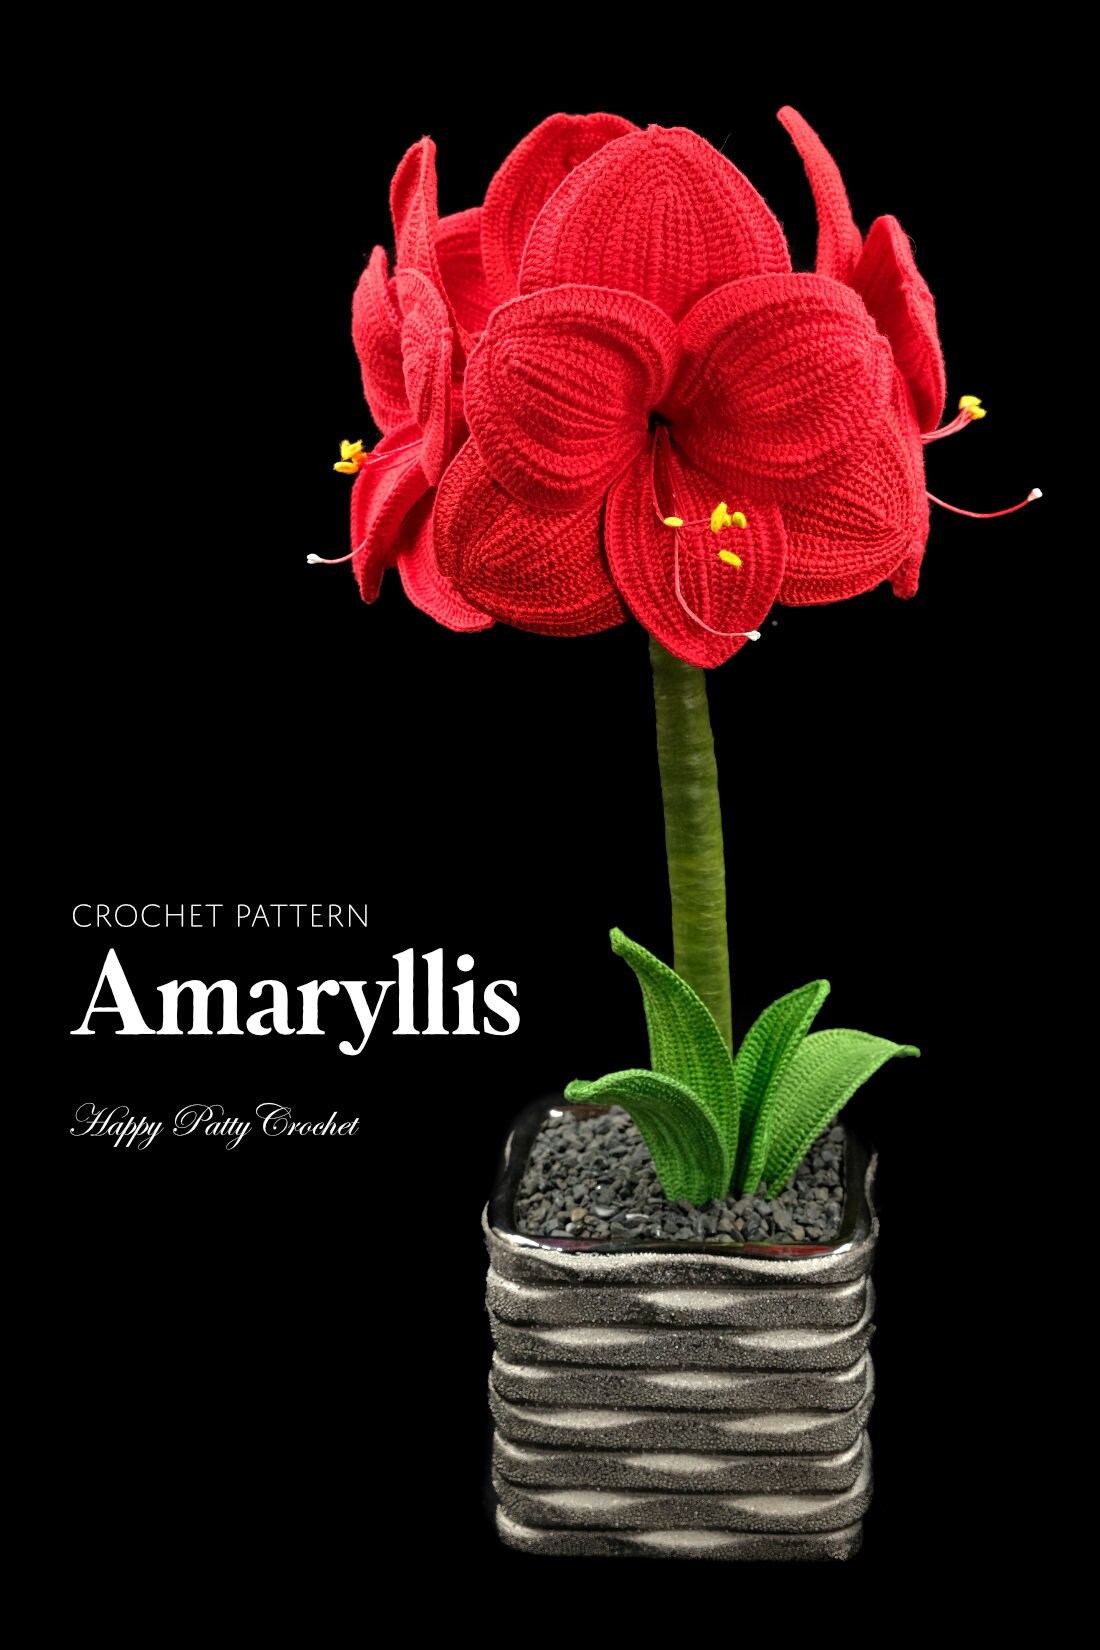 Crochet Amaryllis Pattern - Crochet Flower Pattern for an Amaryllis